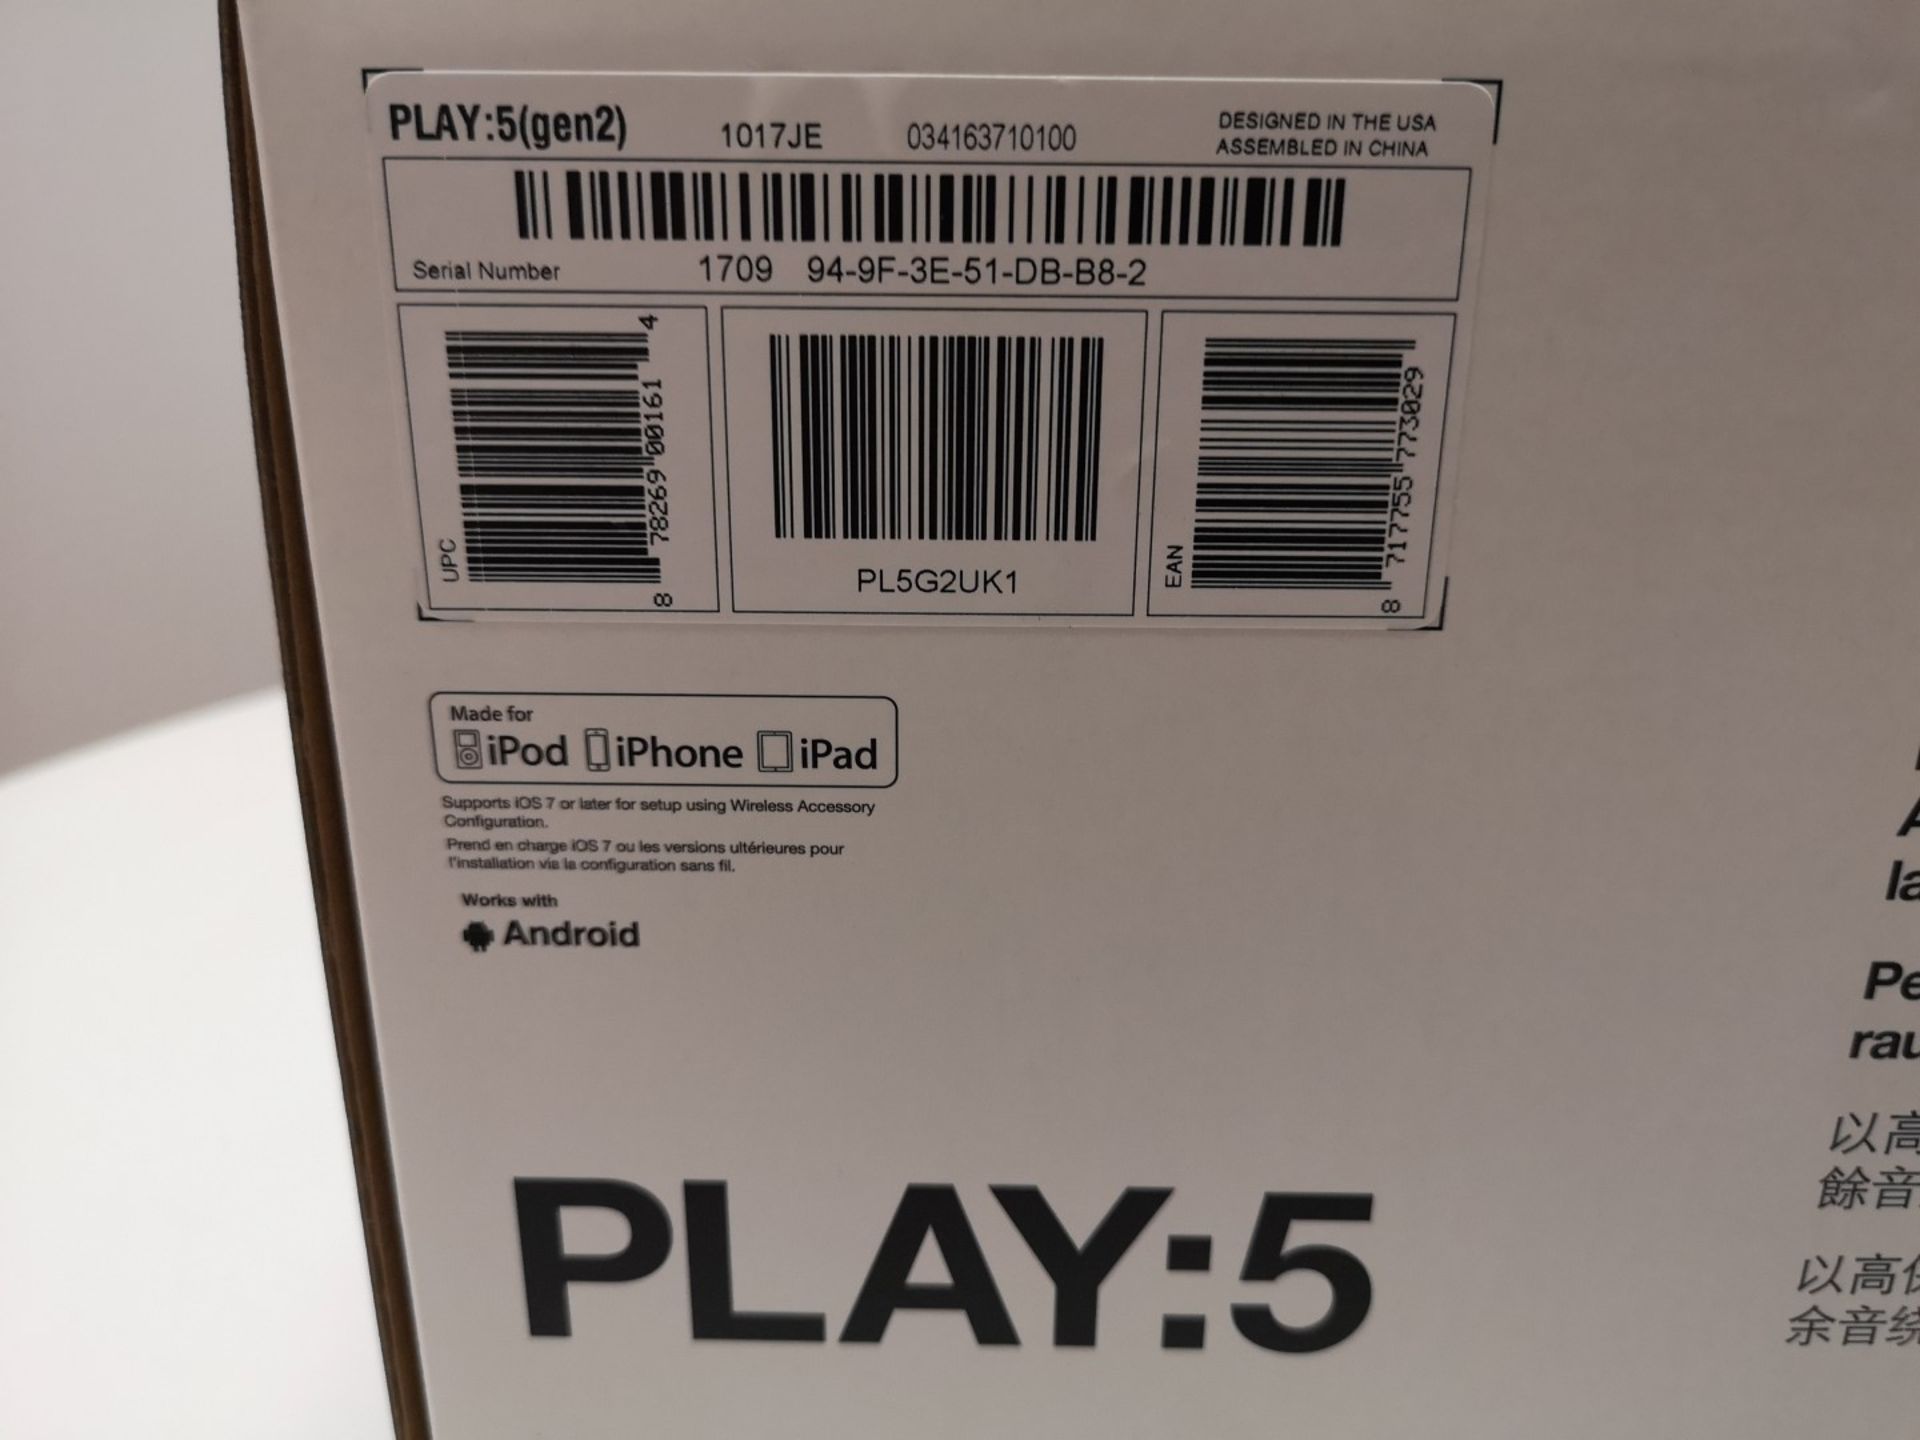 Sonos Play:5 (Gen 2) Bluetooth Speaker - Image 4 of 4